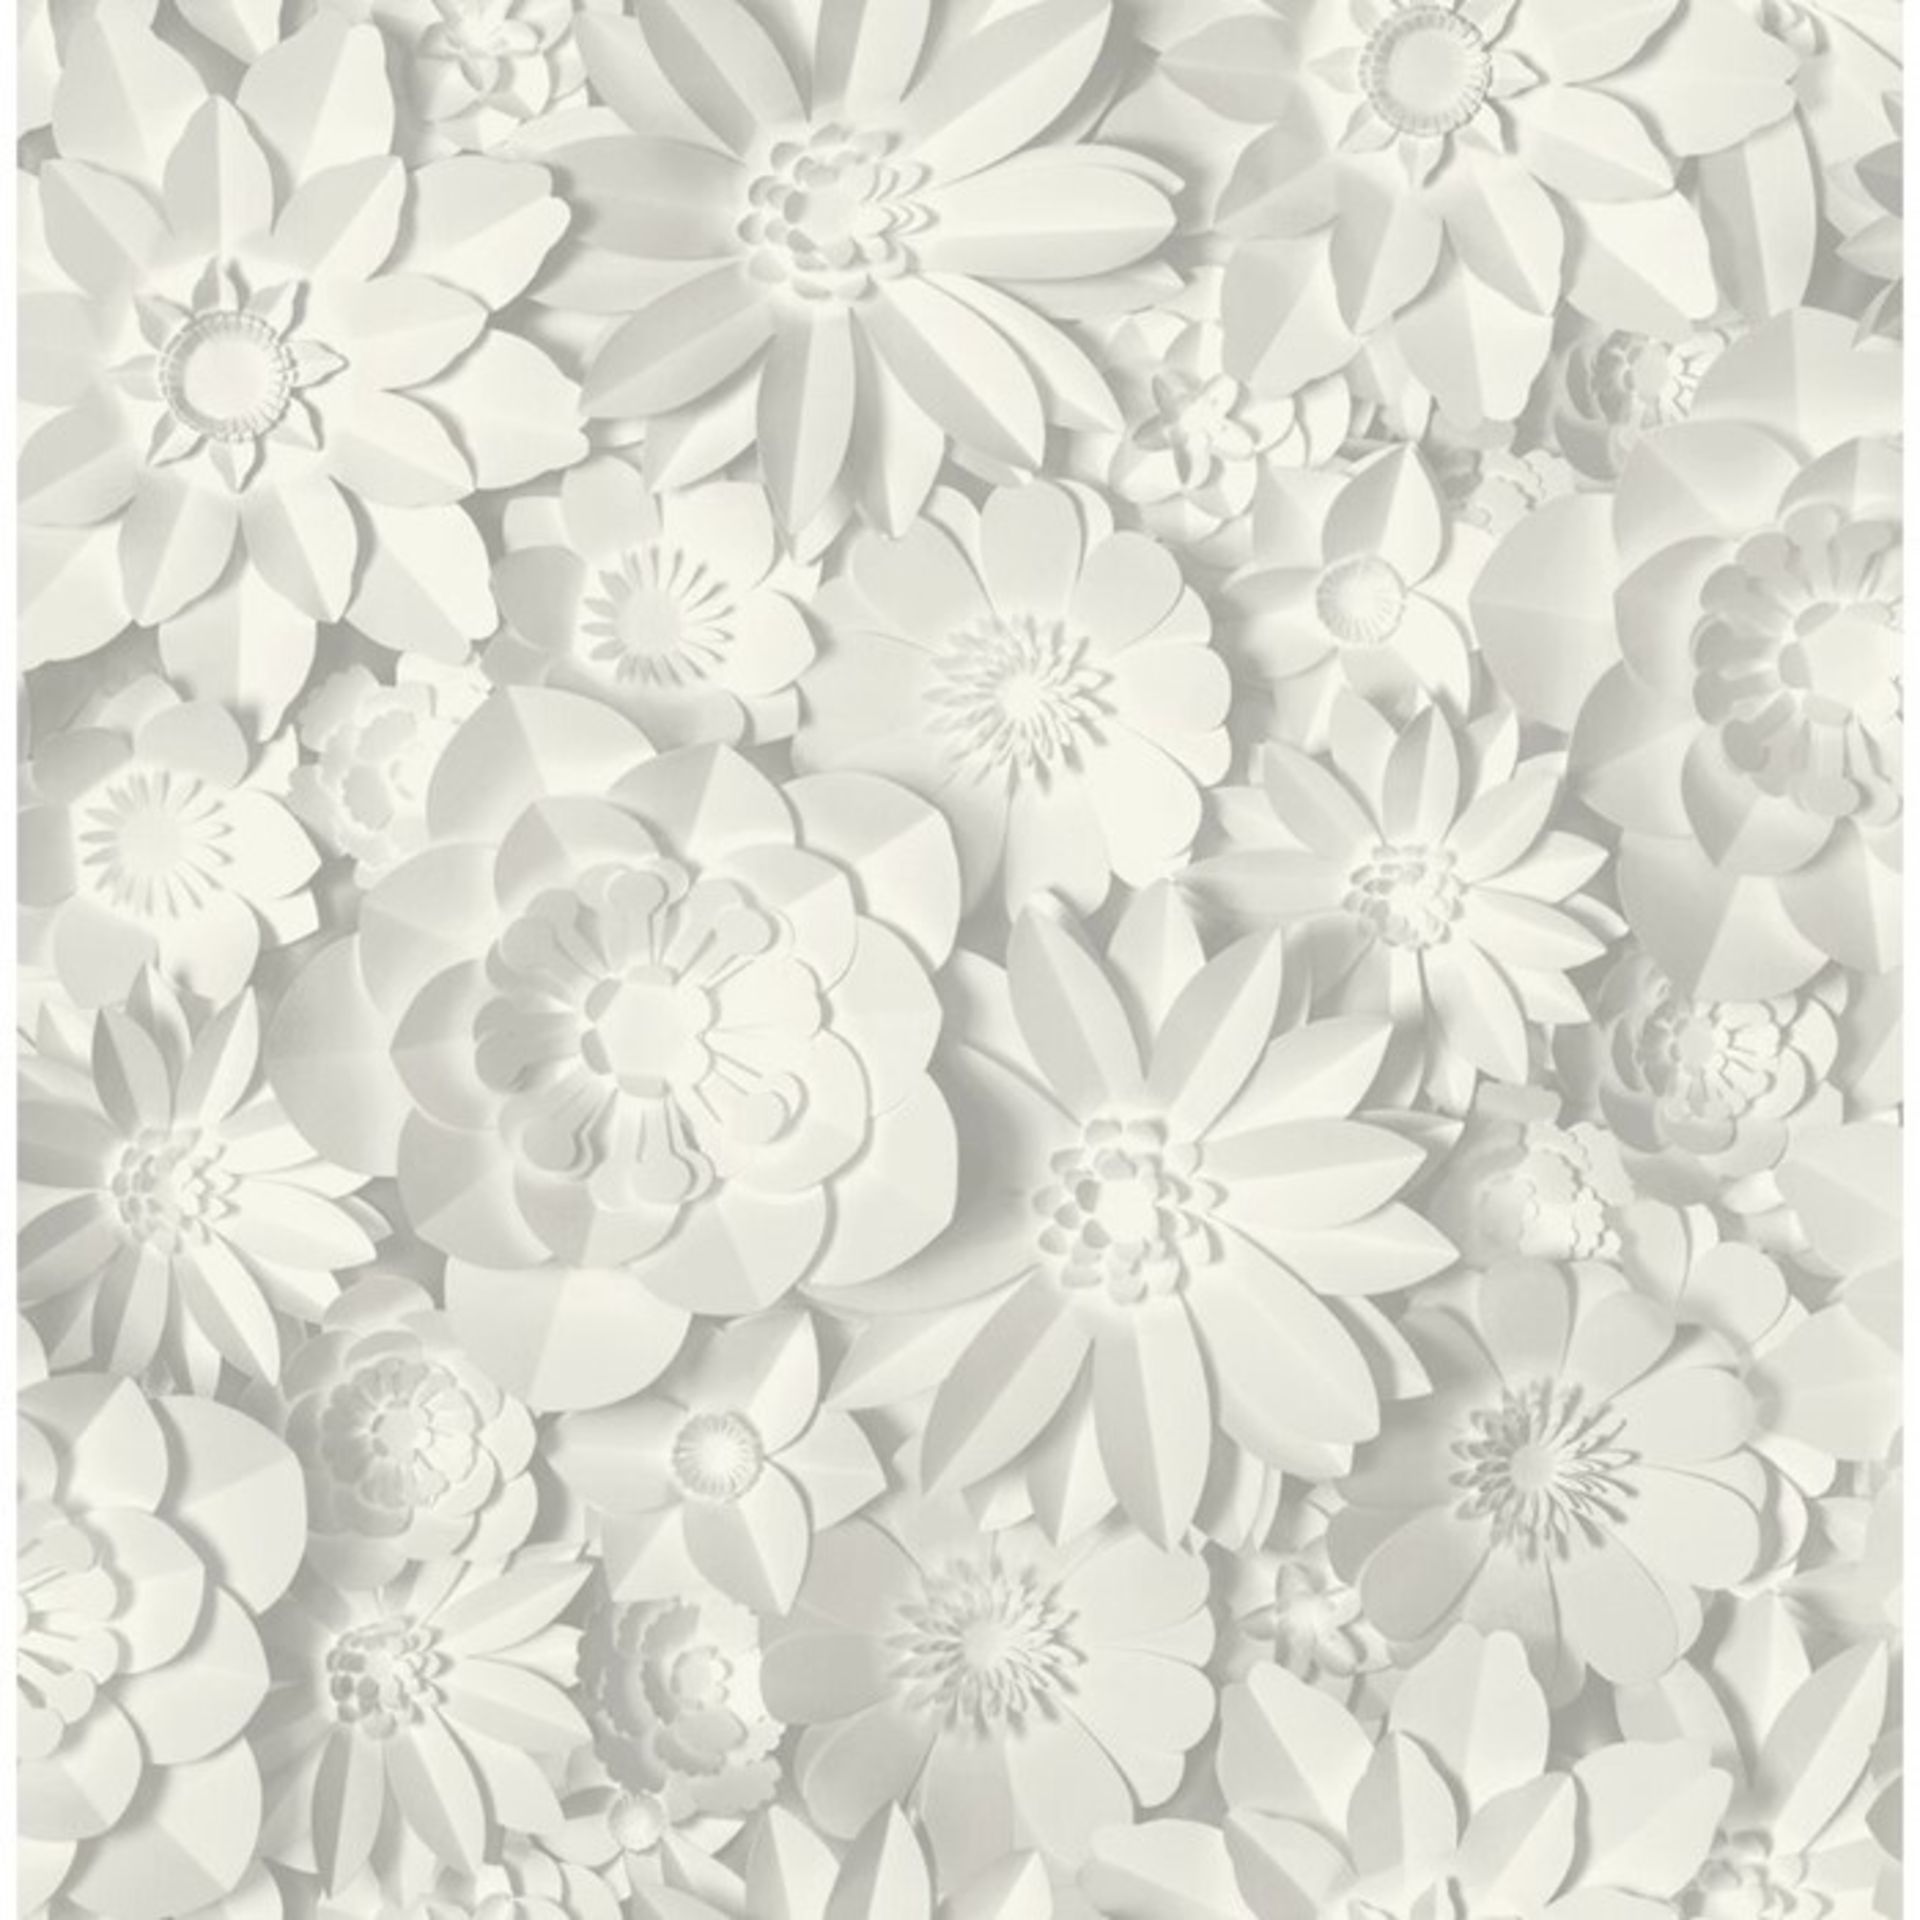 East Urban Home, Dimensions Floral 10.05m x 53cm Wallpaper Roll X2 (WHITE) - RRP £13.99 (